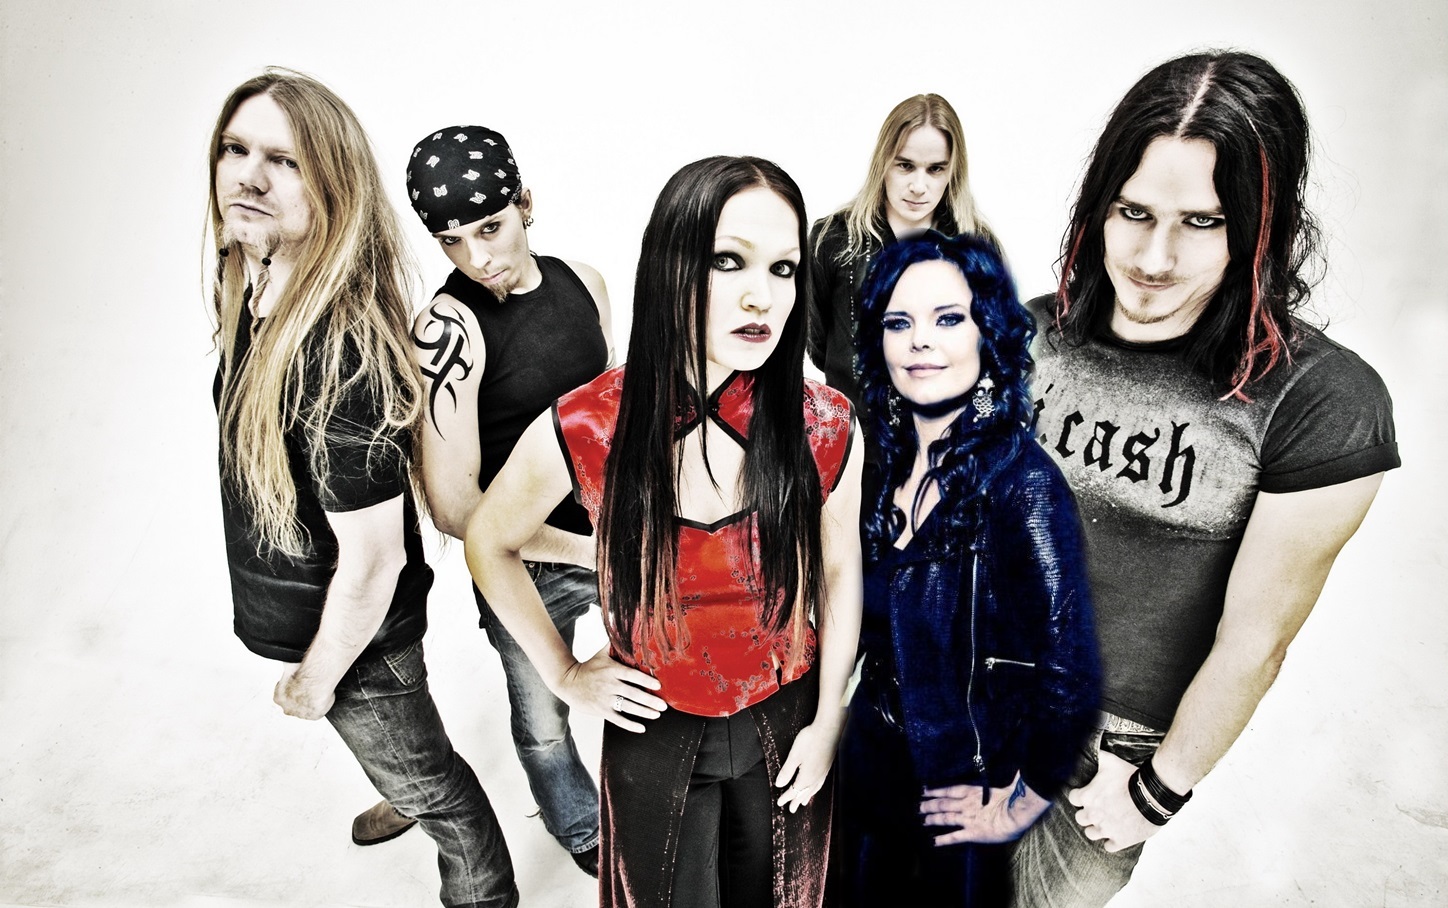 A legsikeresebb videoklipek: Nightwish